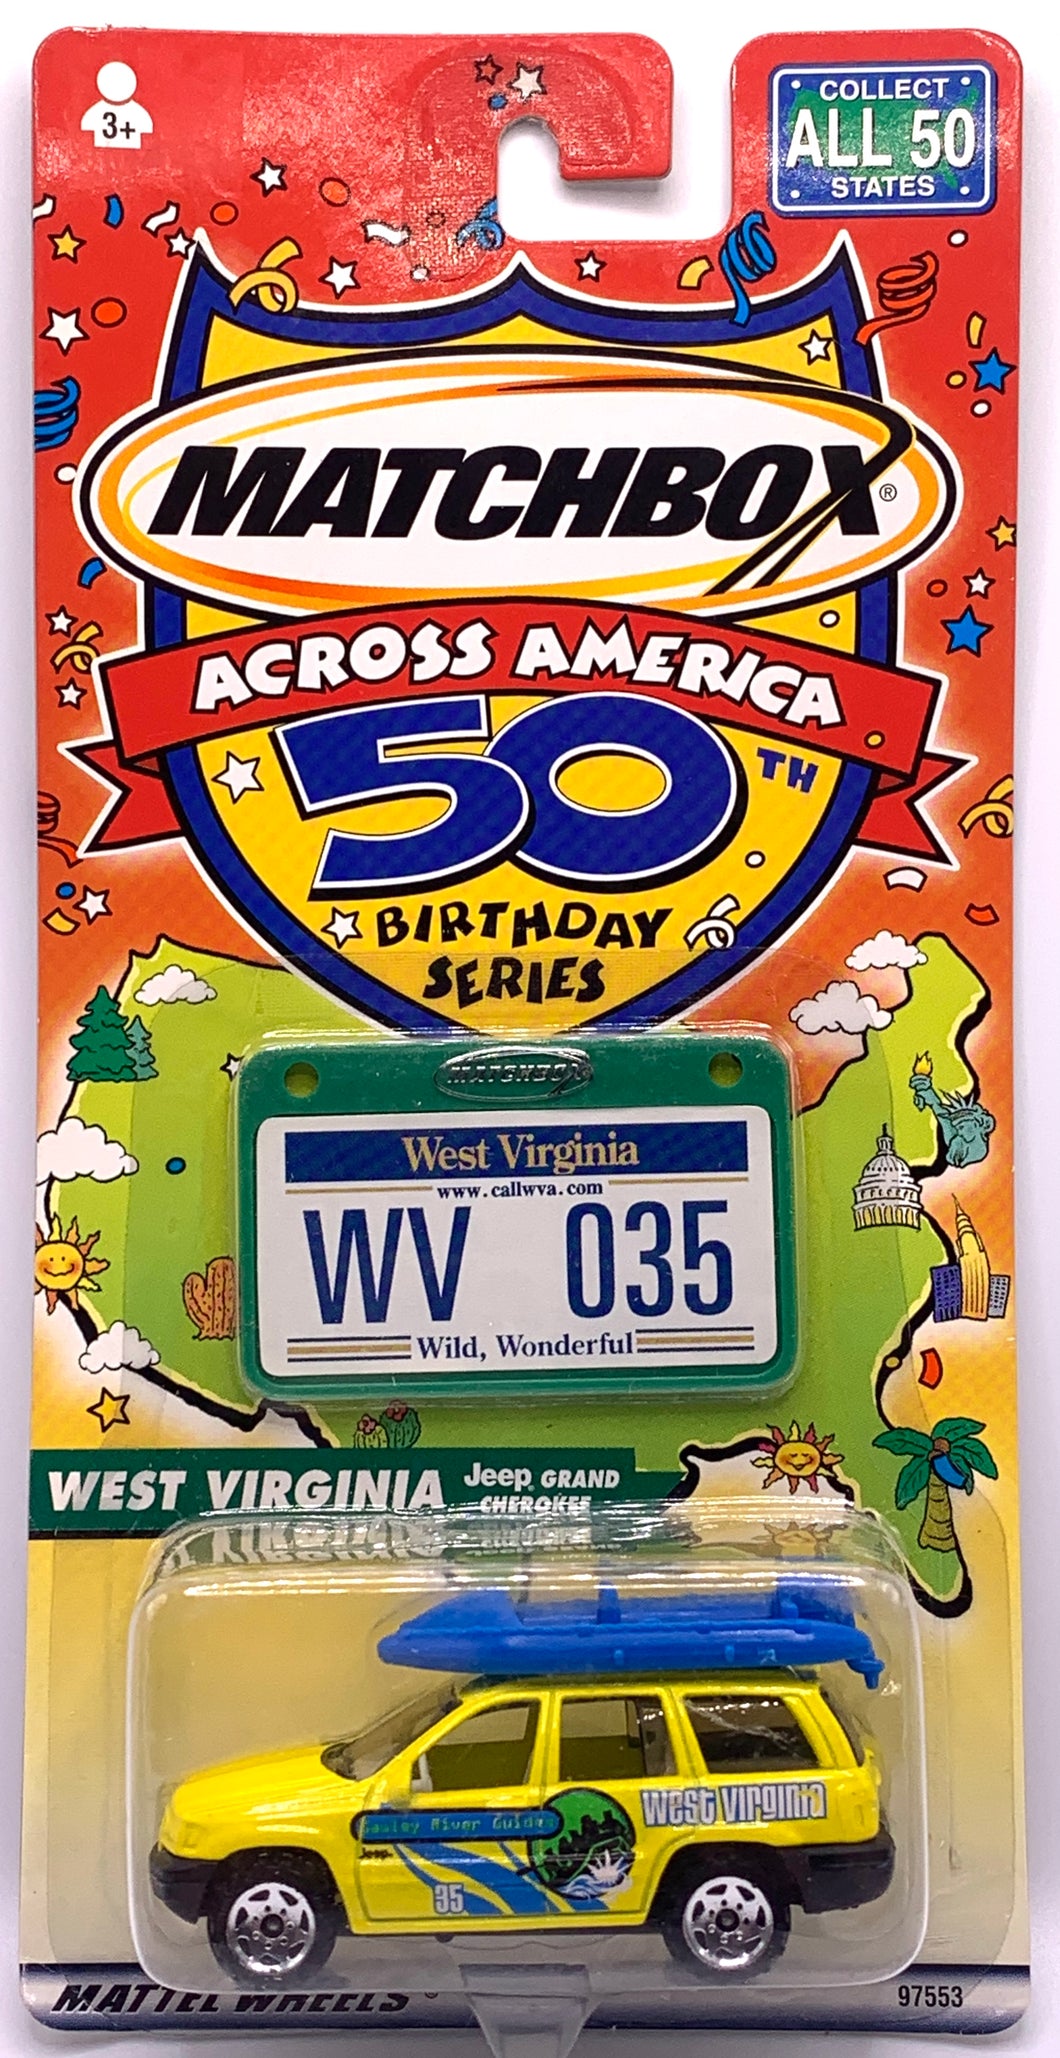 WEST VIRGIINIA Jeep Grand Cherokee 1/58 Matchbox Across America 50th Birthday Series